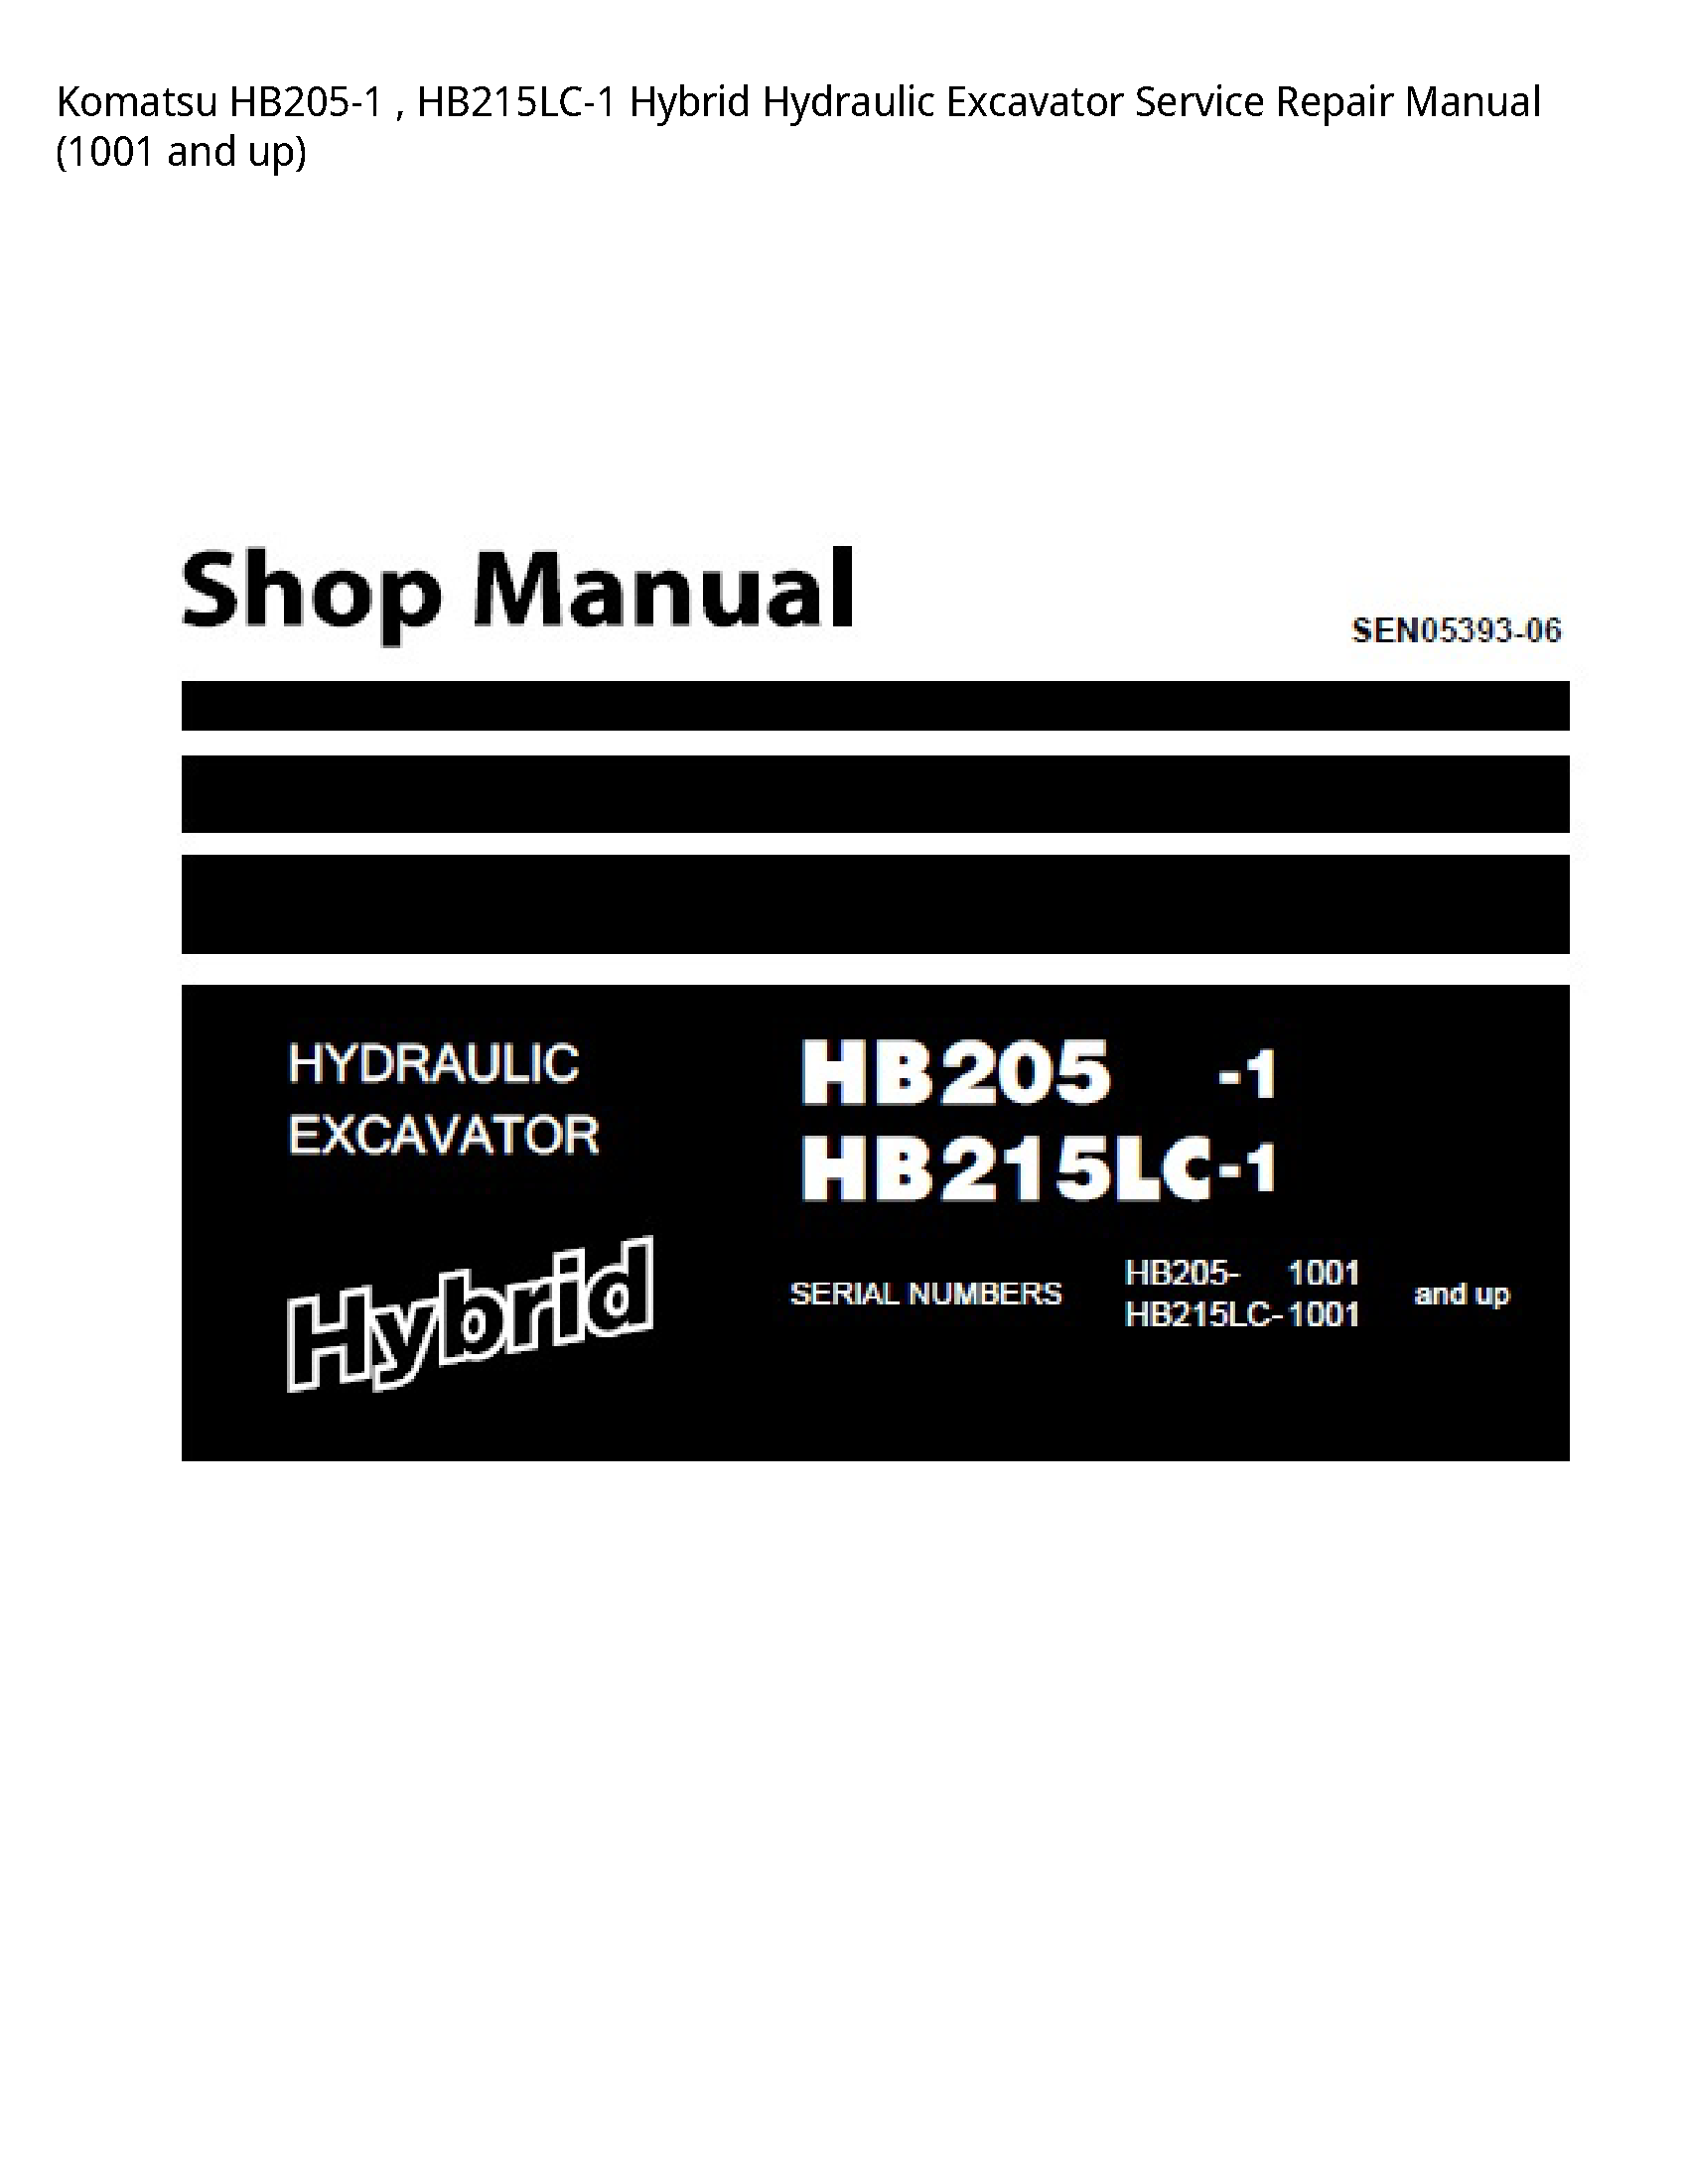 KOMATSU HB205-1 Hybrid Hydraulic Excavator manual